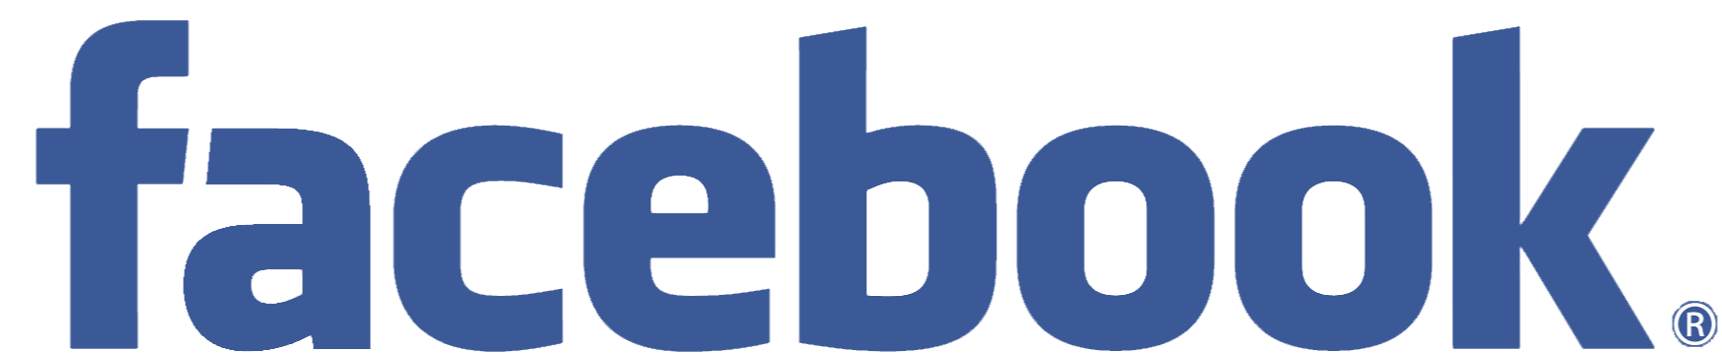 fb logo.png